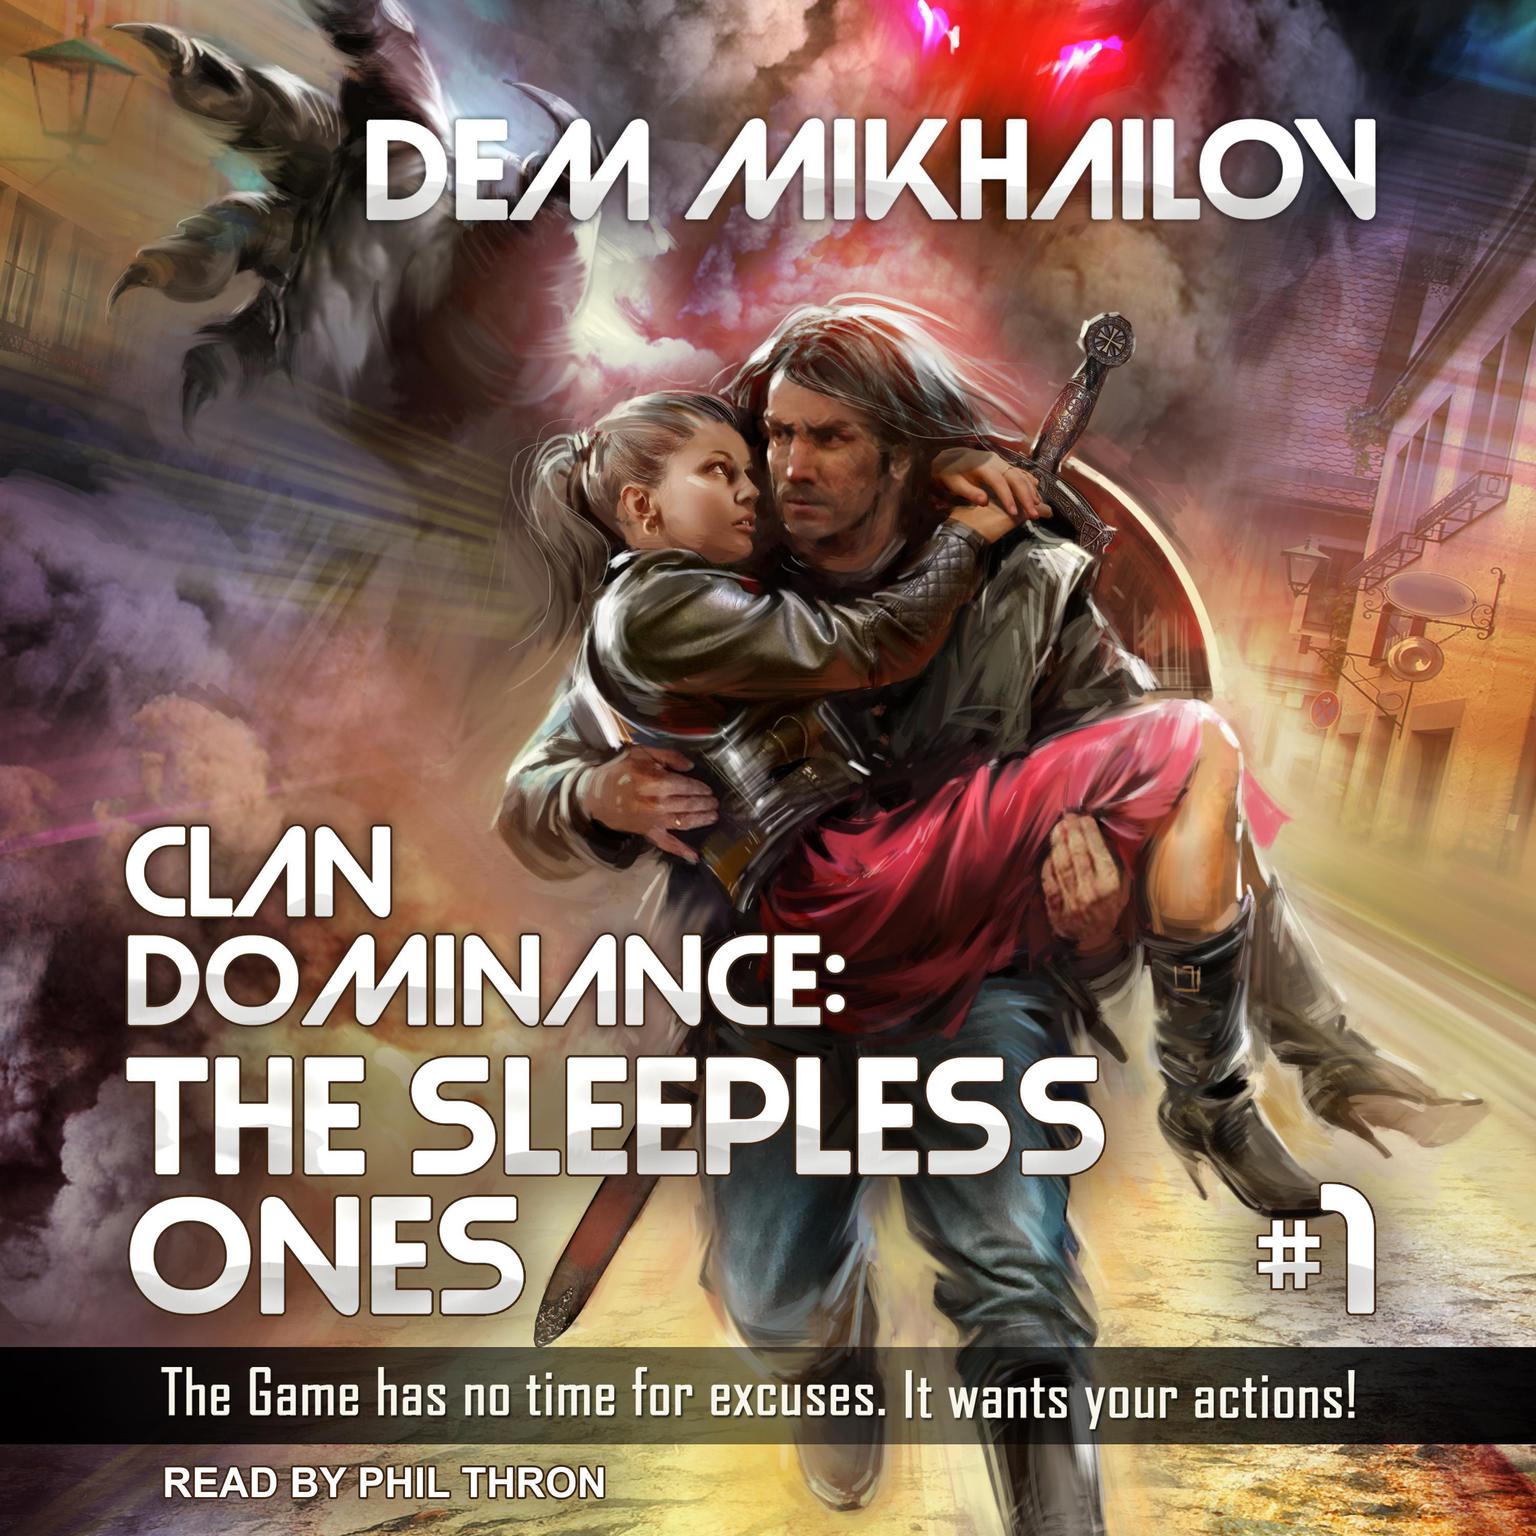 Clan Dominance: The Sleepless Ones #1 Audiobook, by Dem Mikhailov